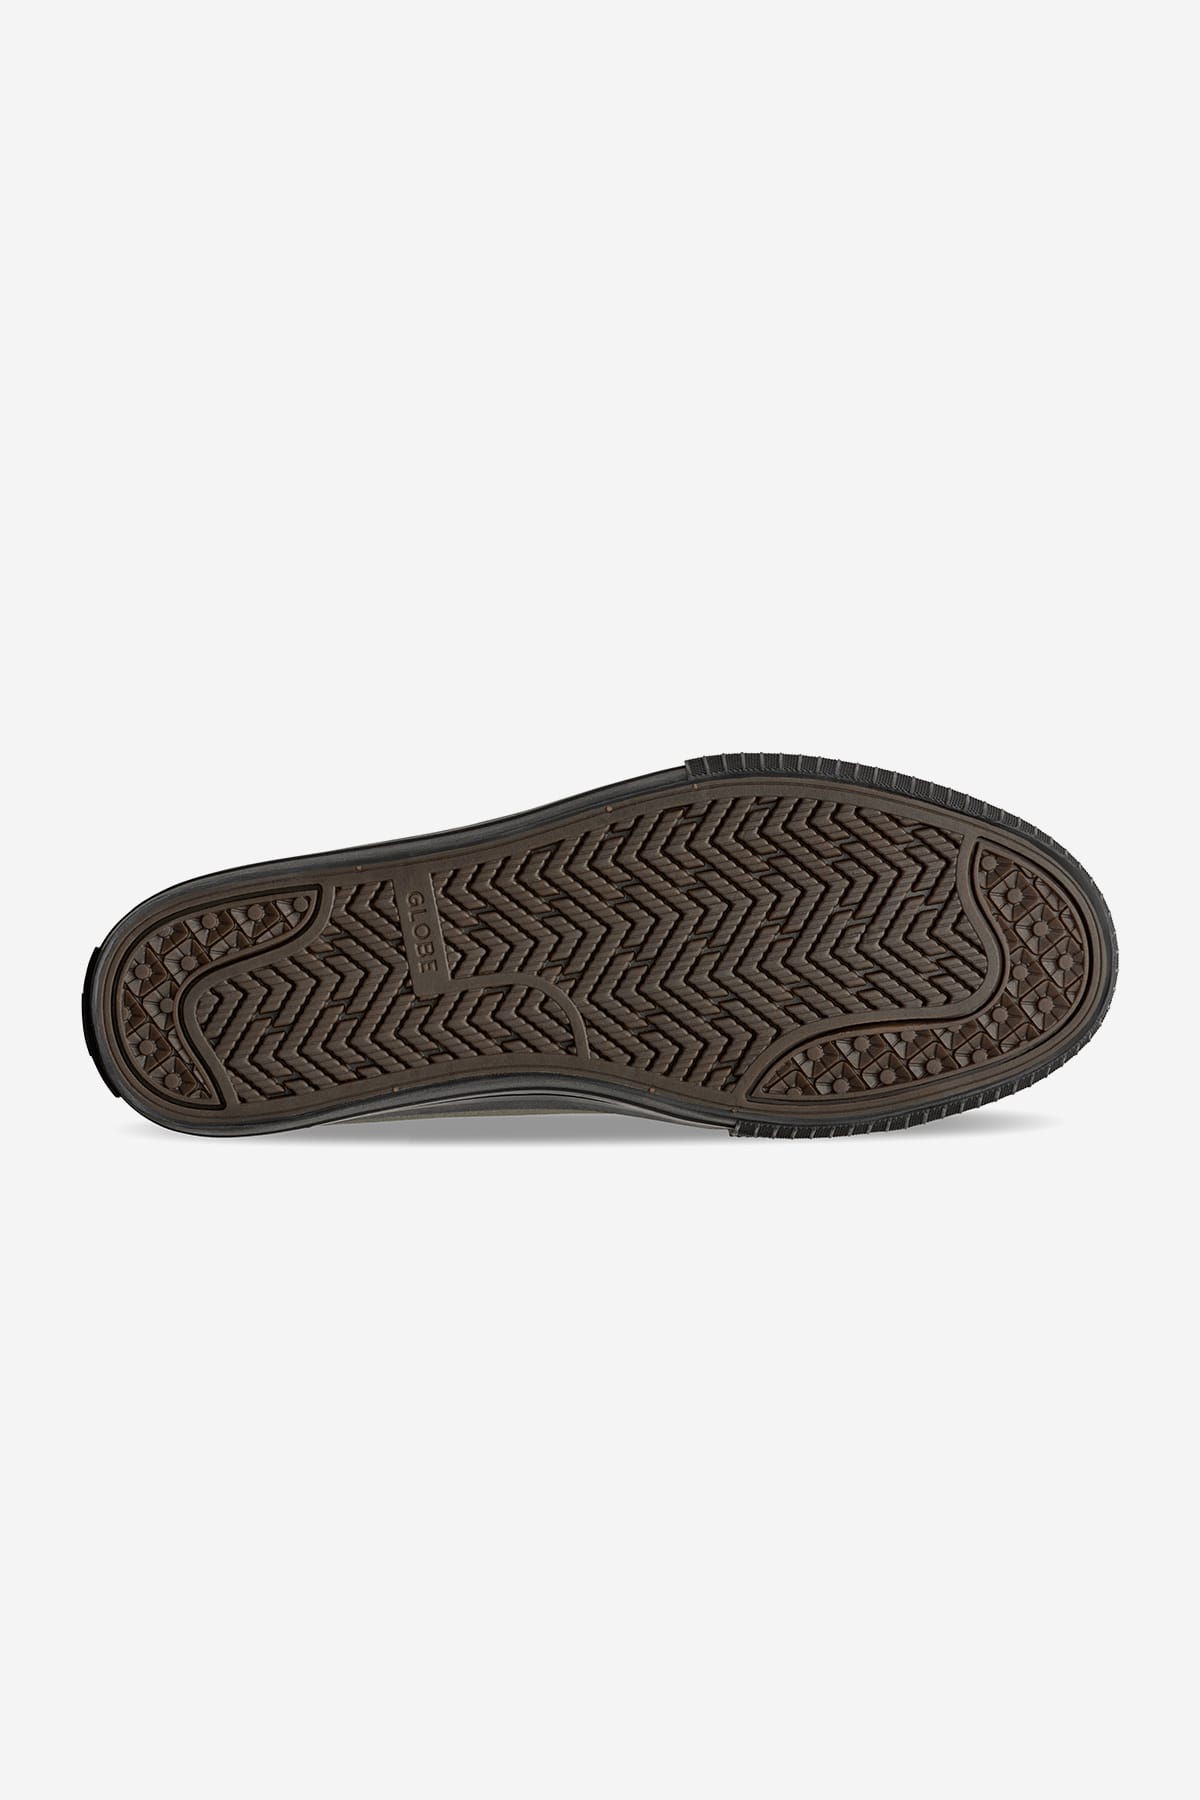 Globe - Gillette - Oscuro Olive/Negro - skateboard Zapatos